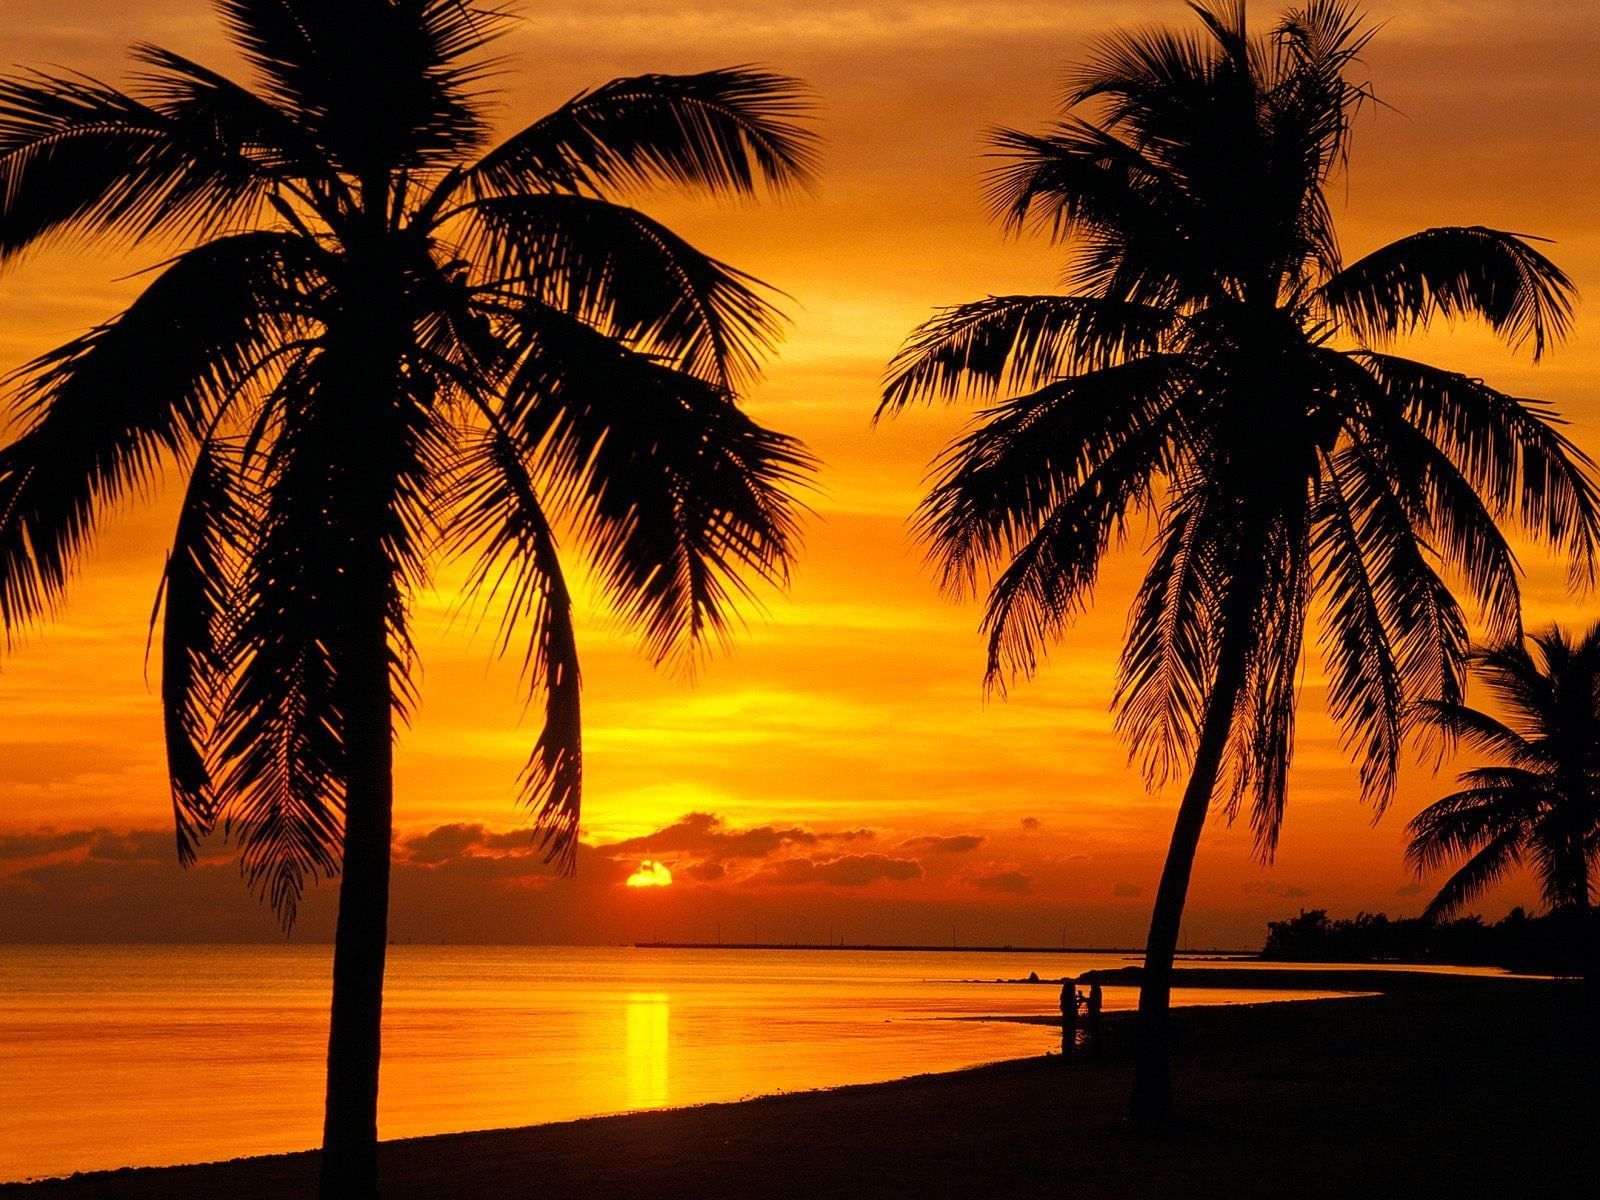 Landscape Palm Trees Sunset Silhouette Tropical Skyscape 720p